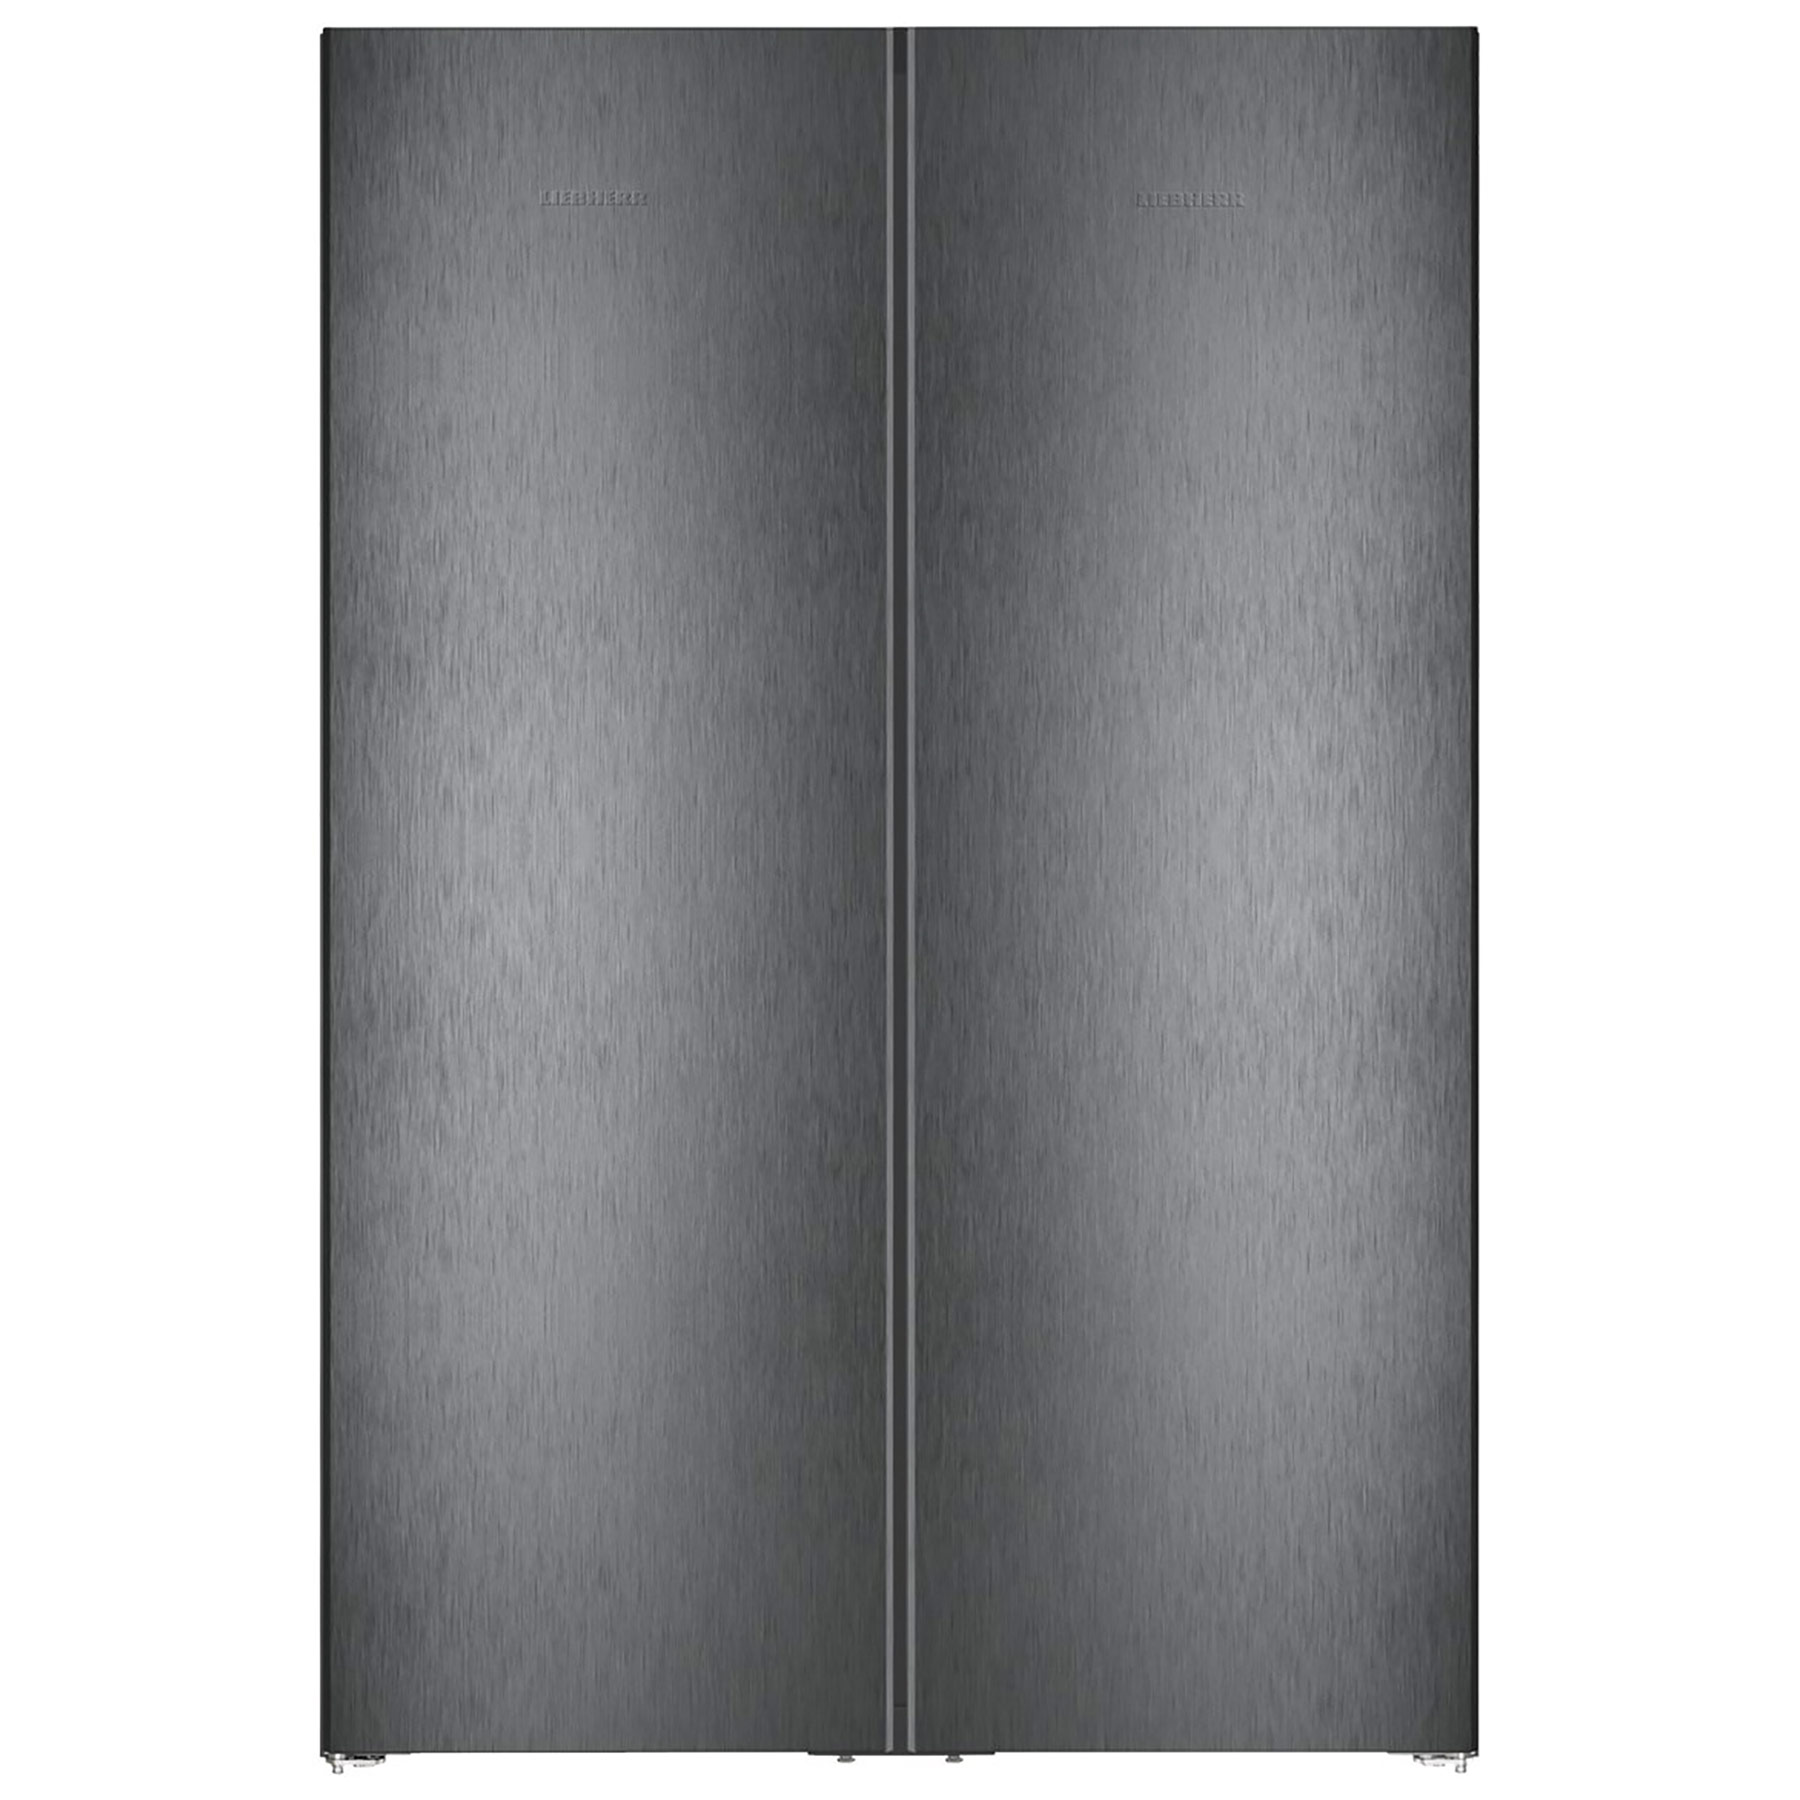 Image of Liebherr XRFBD5220 American Fridge Freezer in Black Steel E Rated